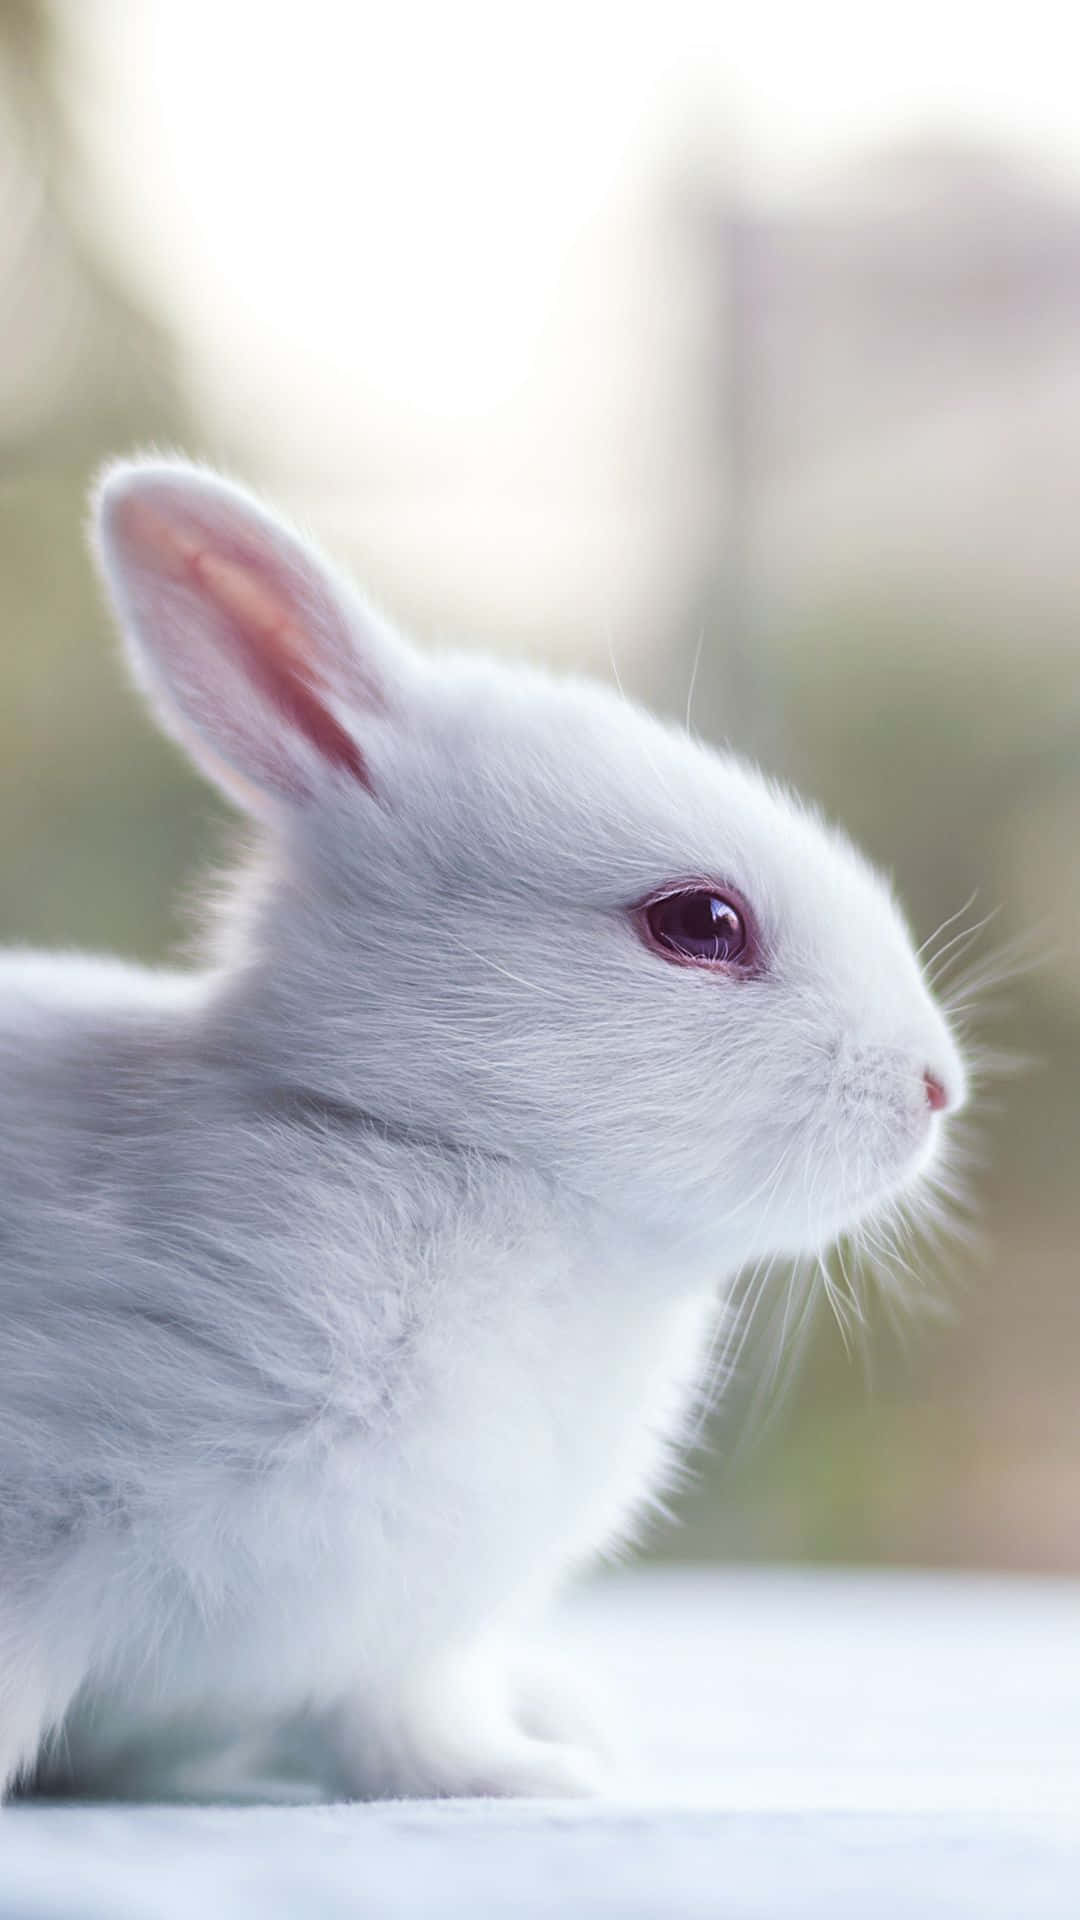 White Rabbits, Cute, Cute Rabbits, Cute Rabbits, Cute Rabbits, Cute Rabbits, Cute Rabbits, Cute Rabbits, Cute Rabbit Wallpaper